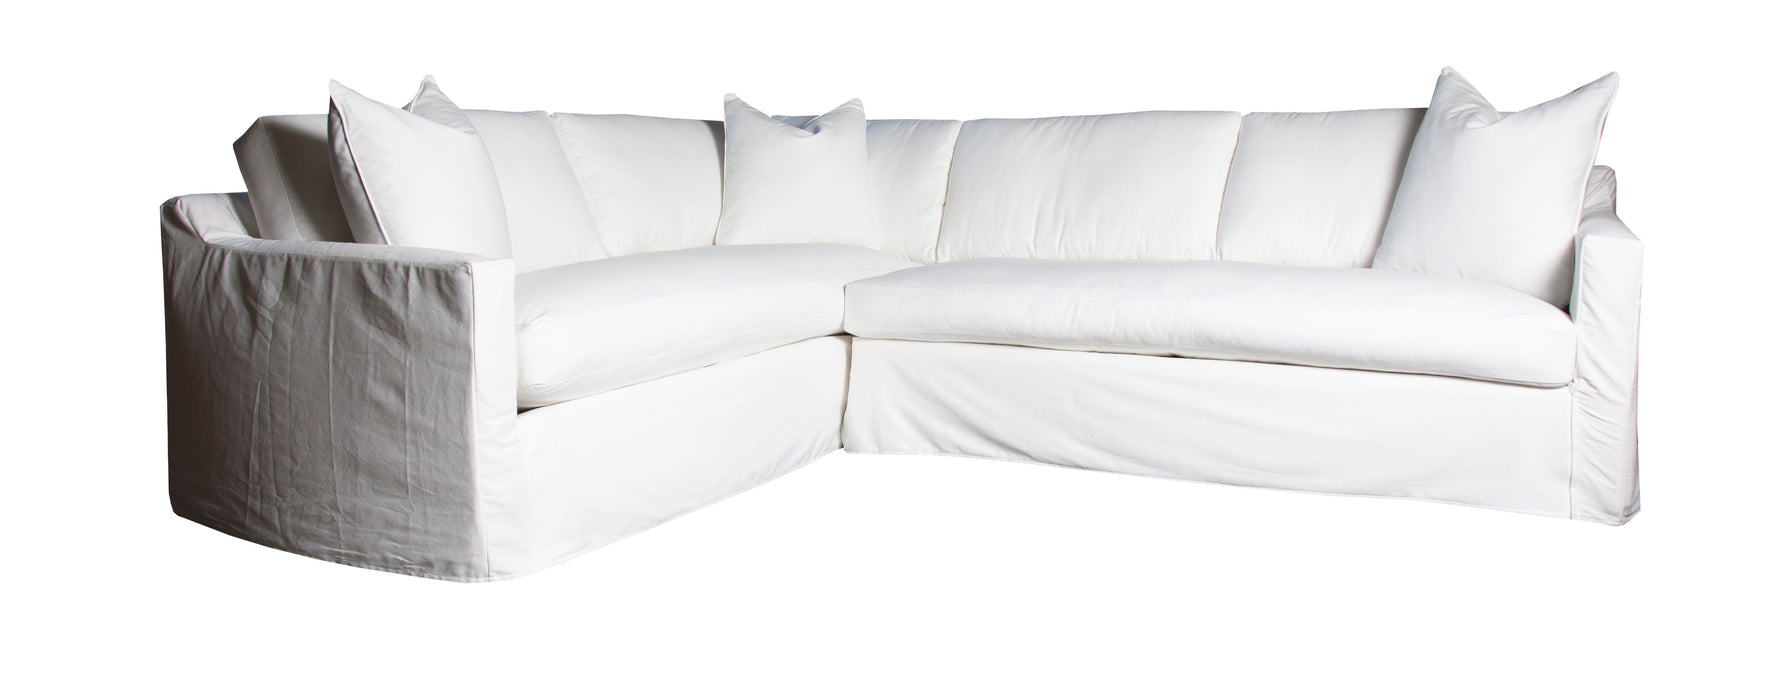 Slipcover One-Arm Sofa - McLean Arctic